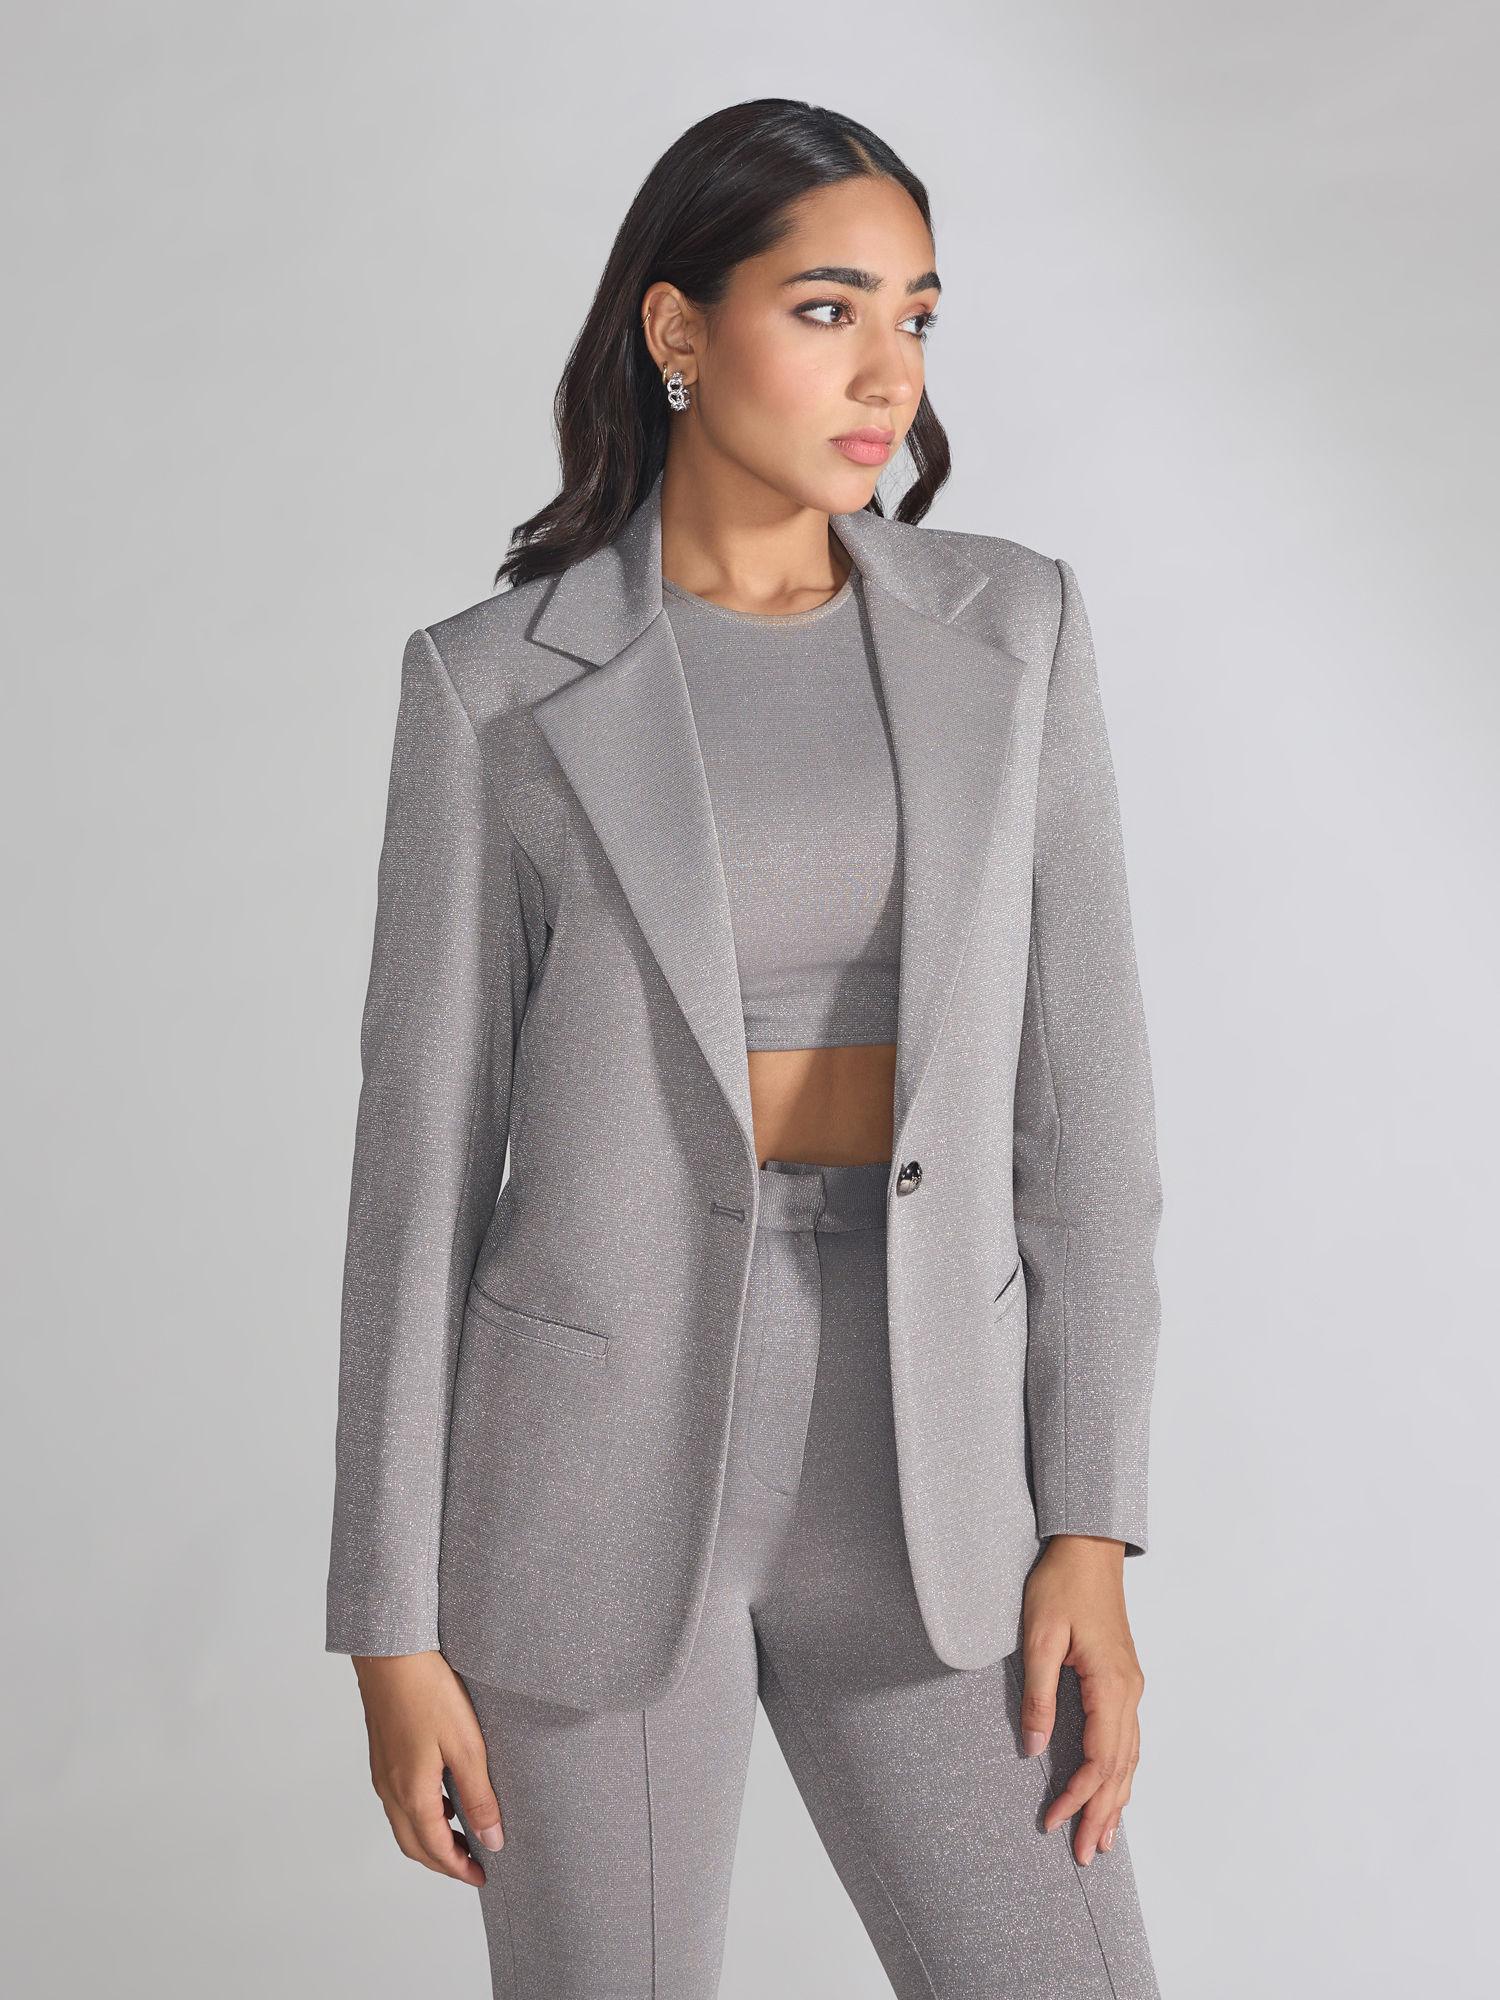 grey-shimmer-full-sleeves-classic-blazer